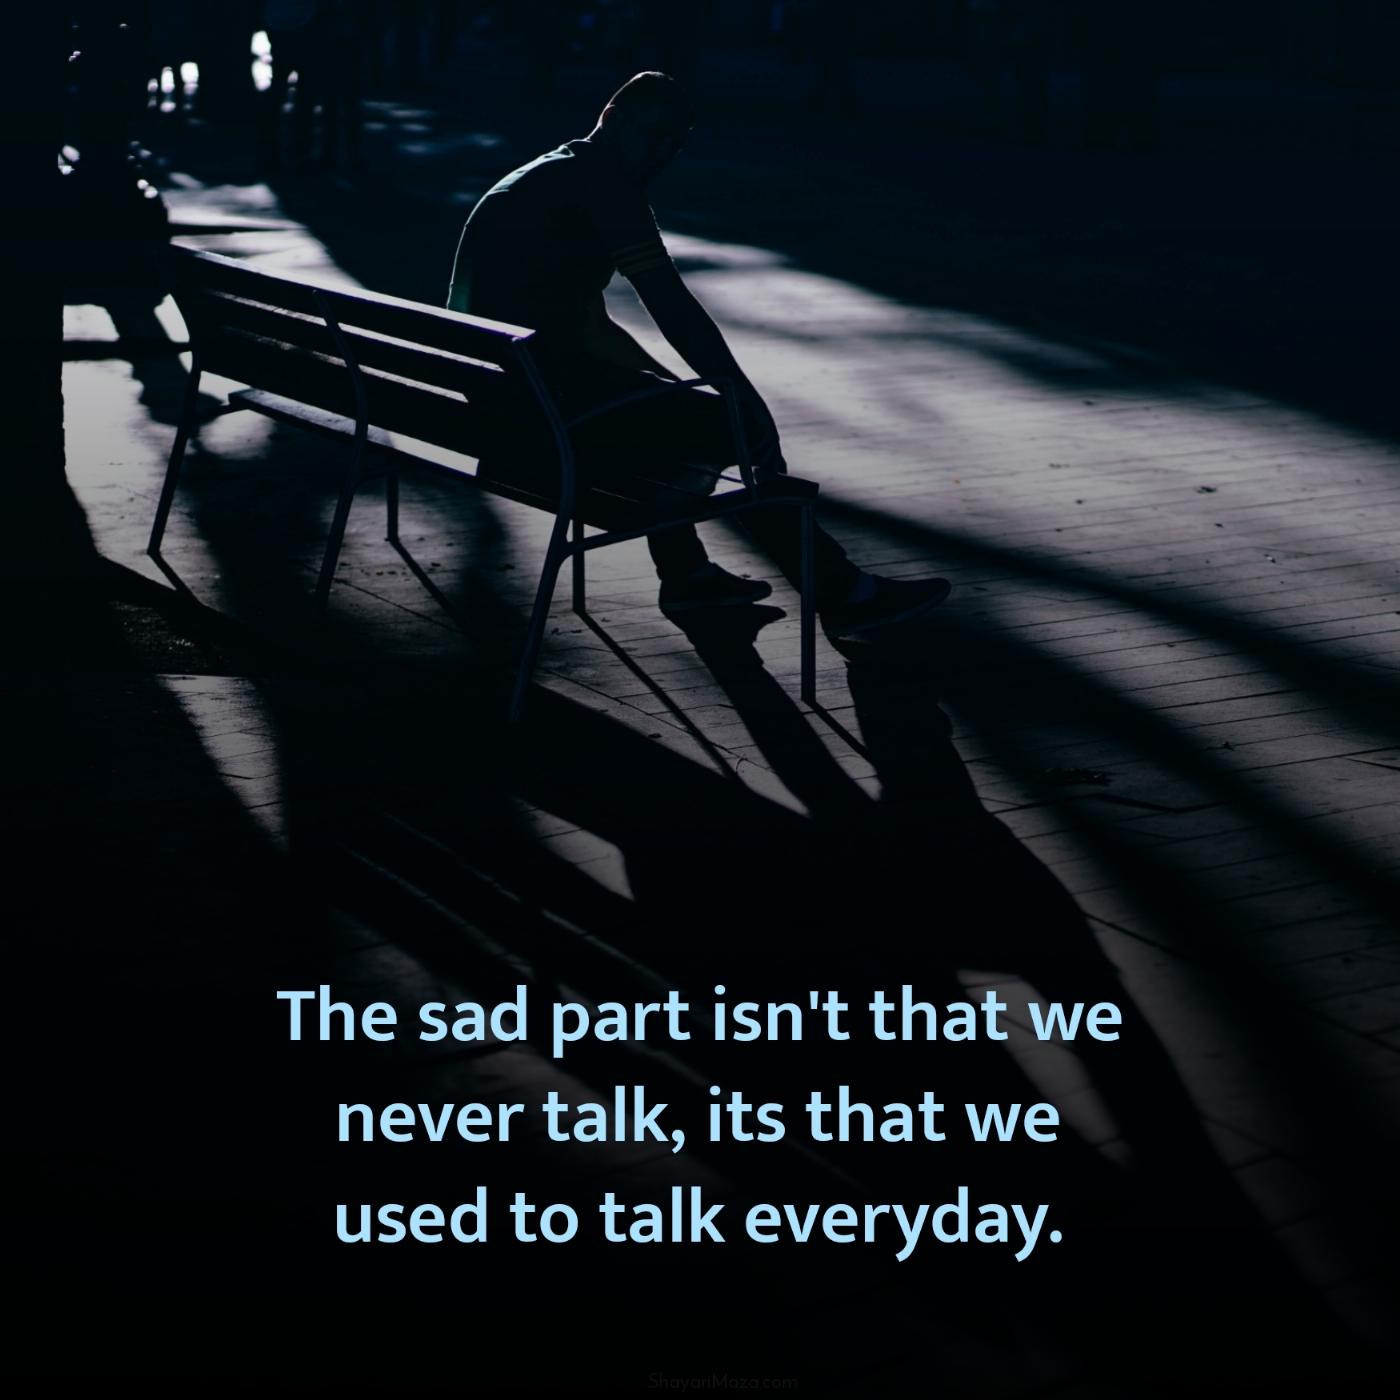 The sad part isn't that we never talk